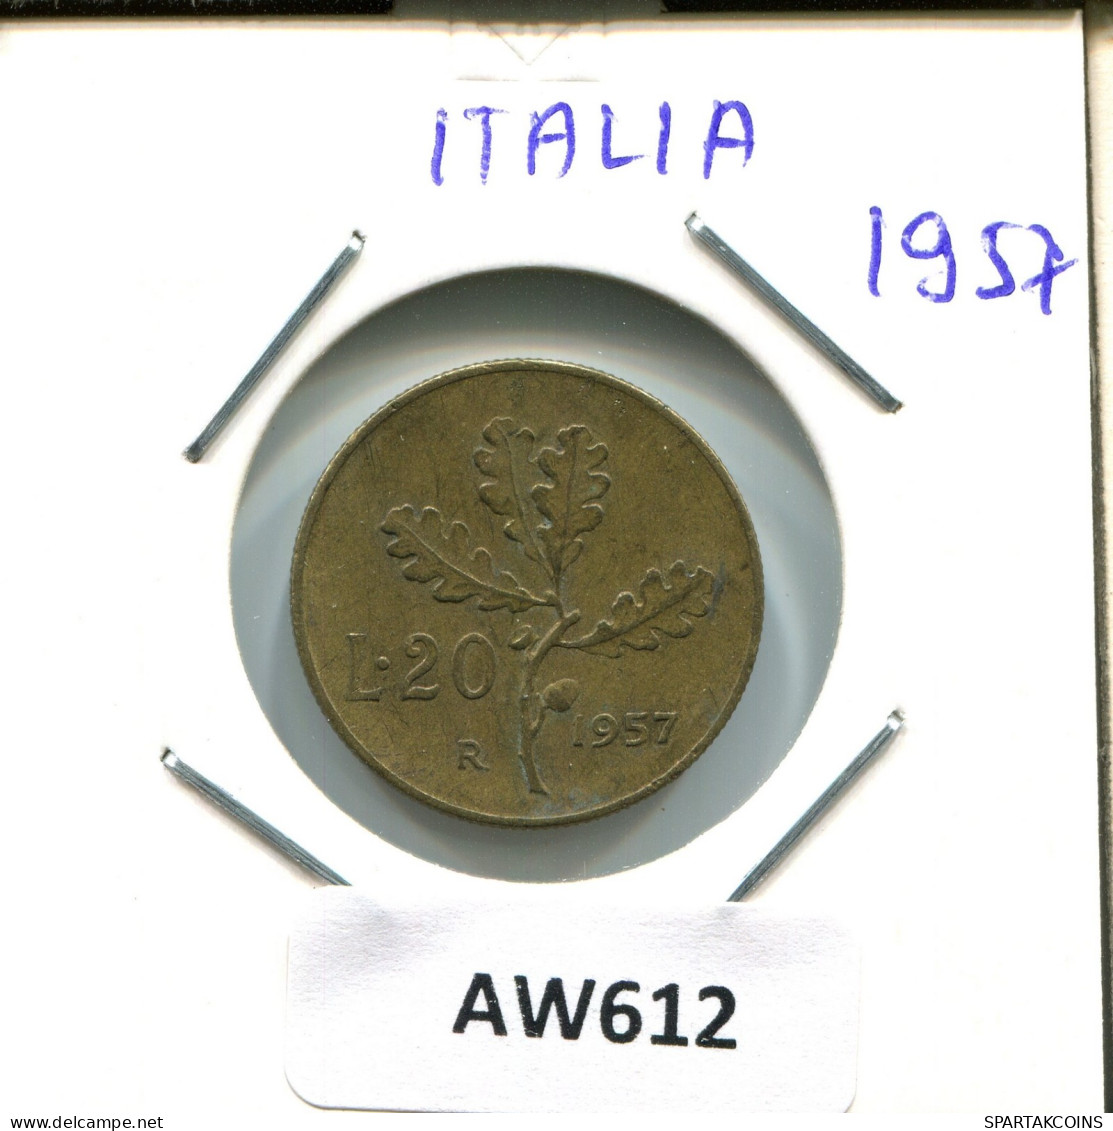 20 LIRE 1957 R ITALIEN ITALY Münze #AW612.D.A - 20 Liras